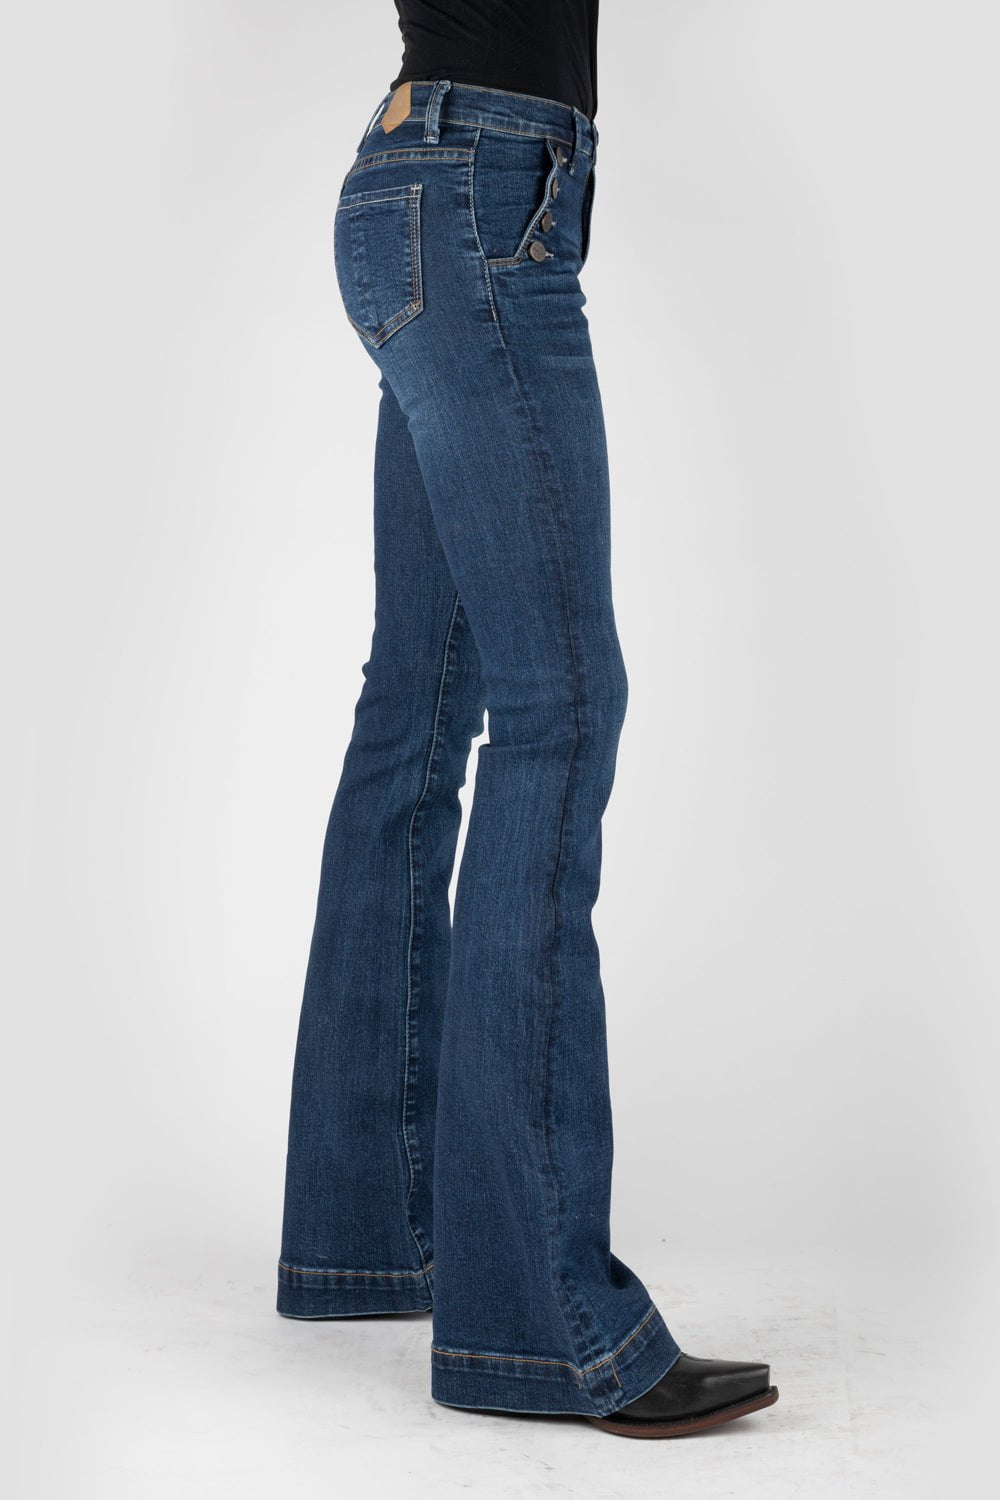 Tin Haul Womens Blue Cotton Blend Libby Fit 4 Button Jeans – The